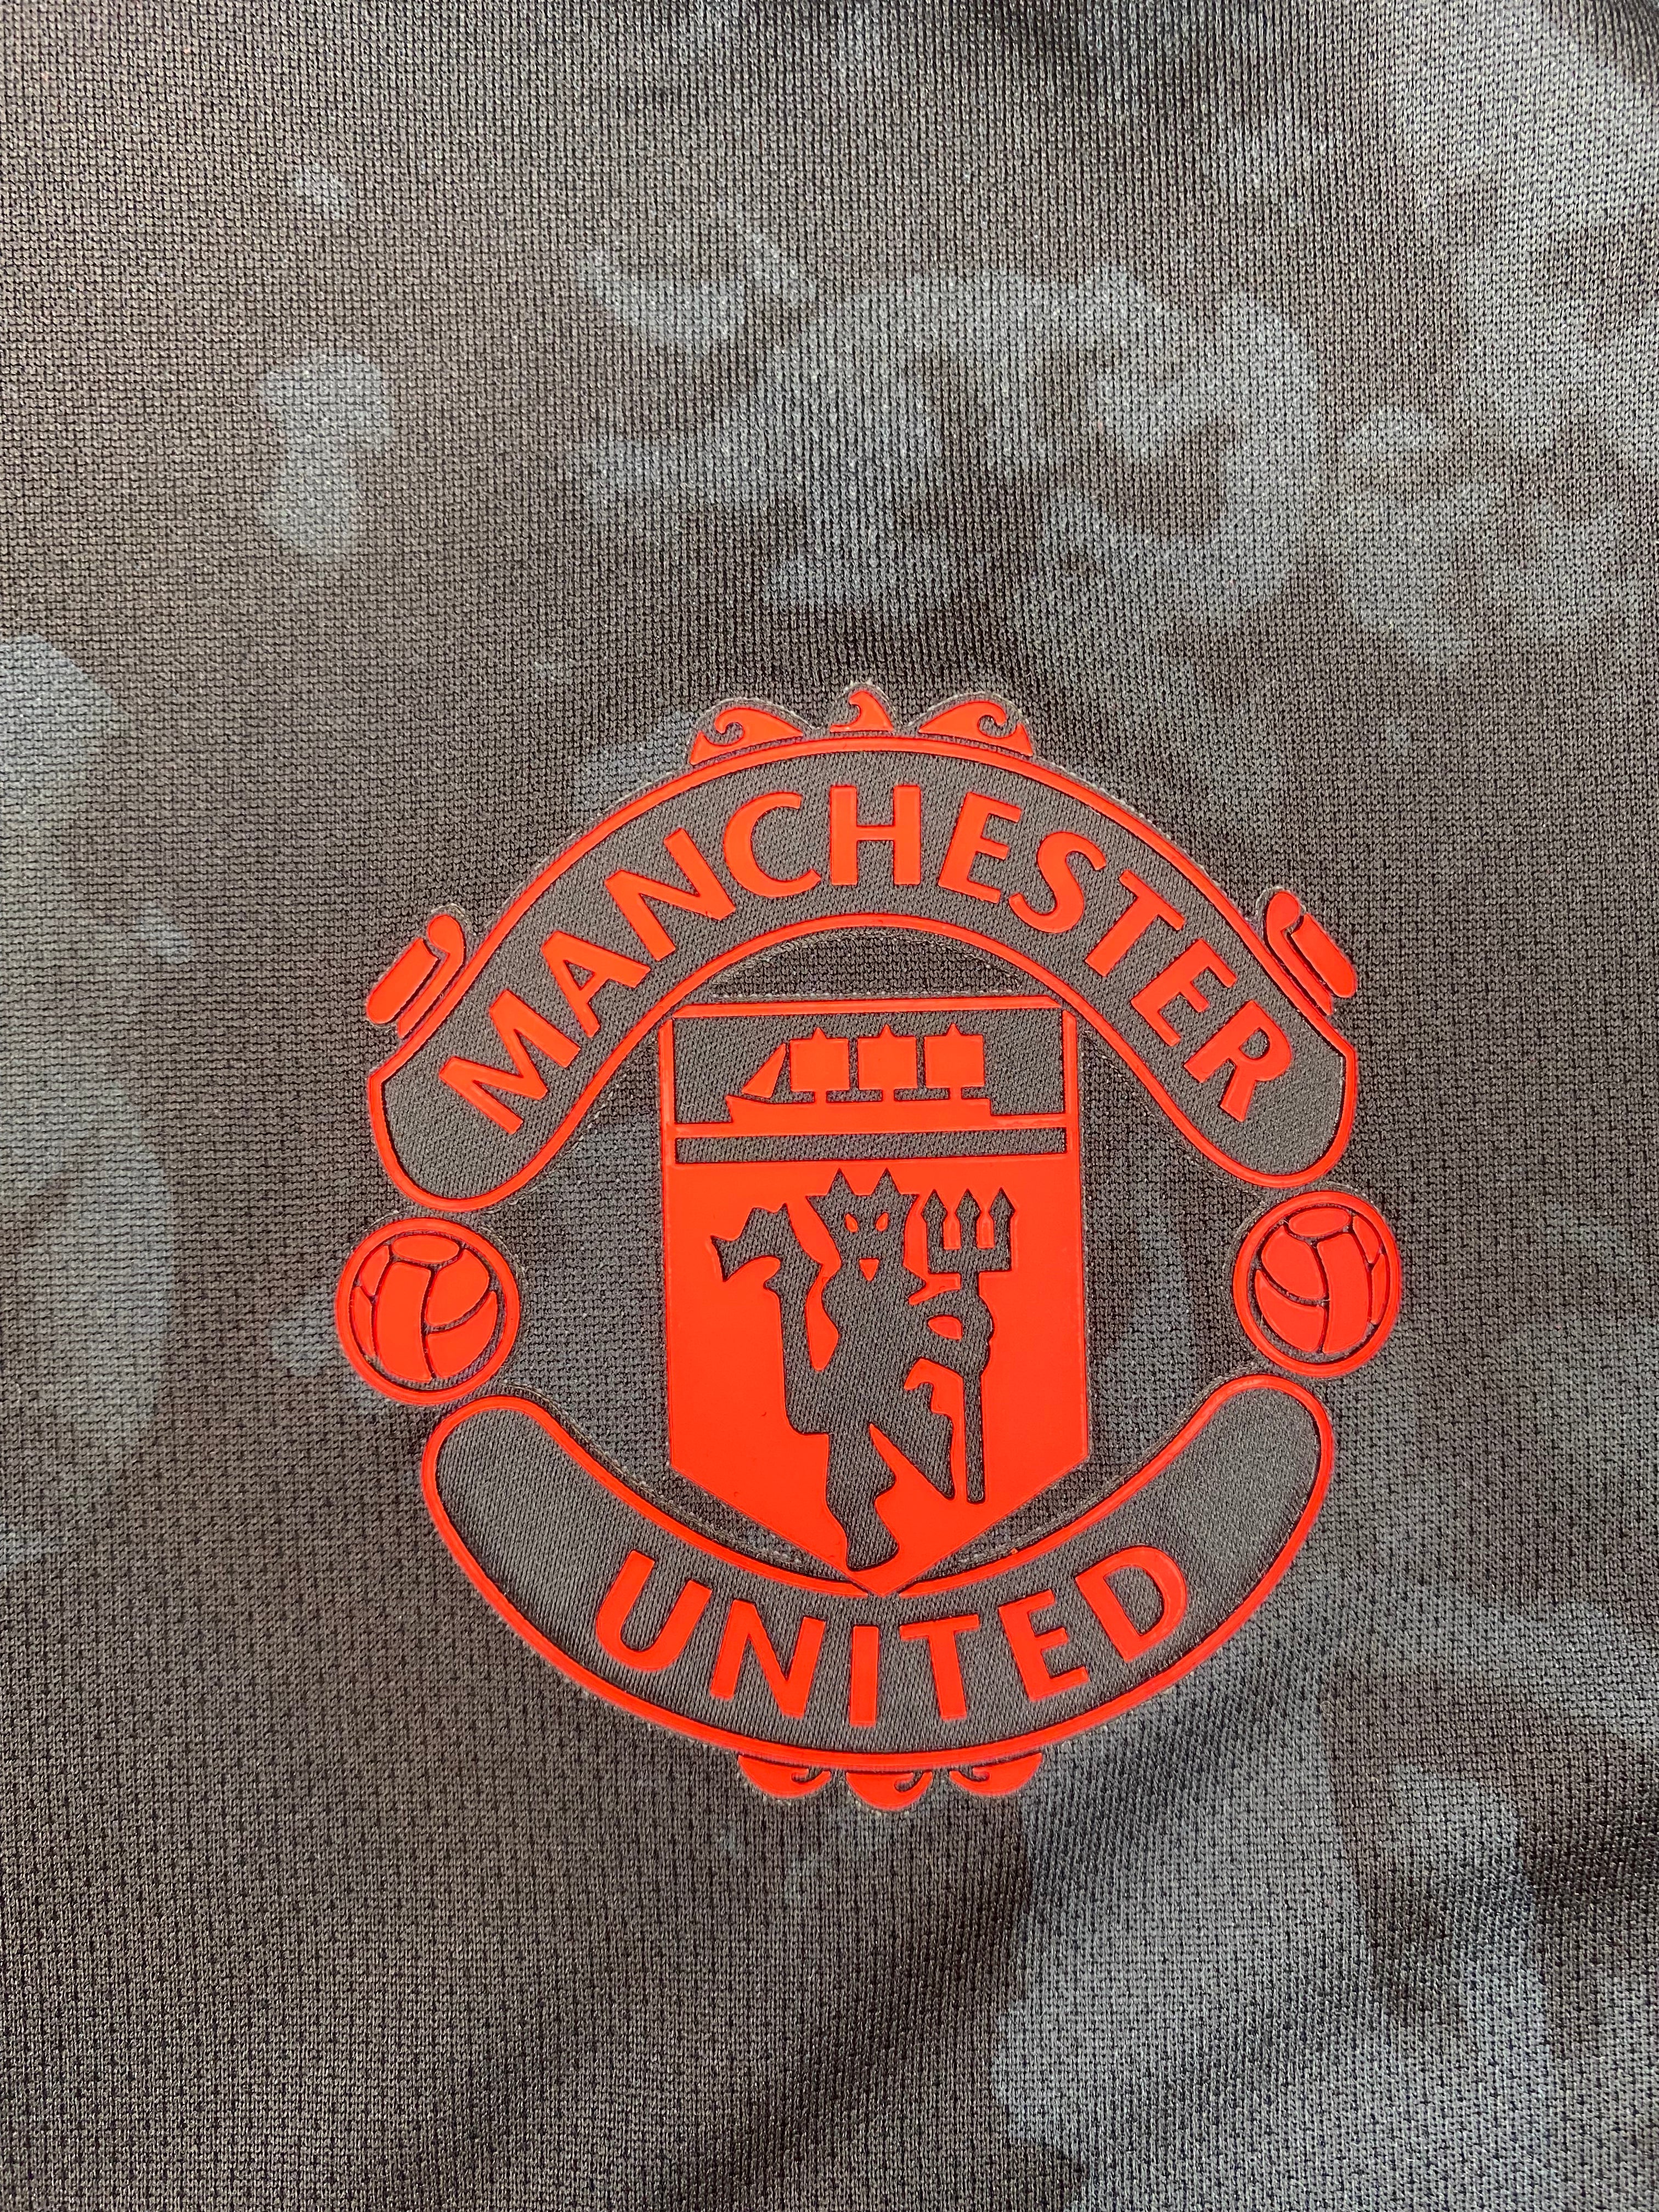 2019/20 Manchester United Third Shirt (XL) BNIB